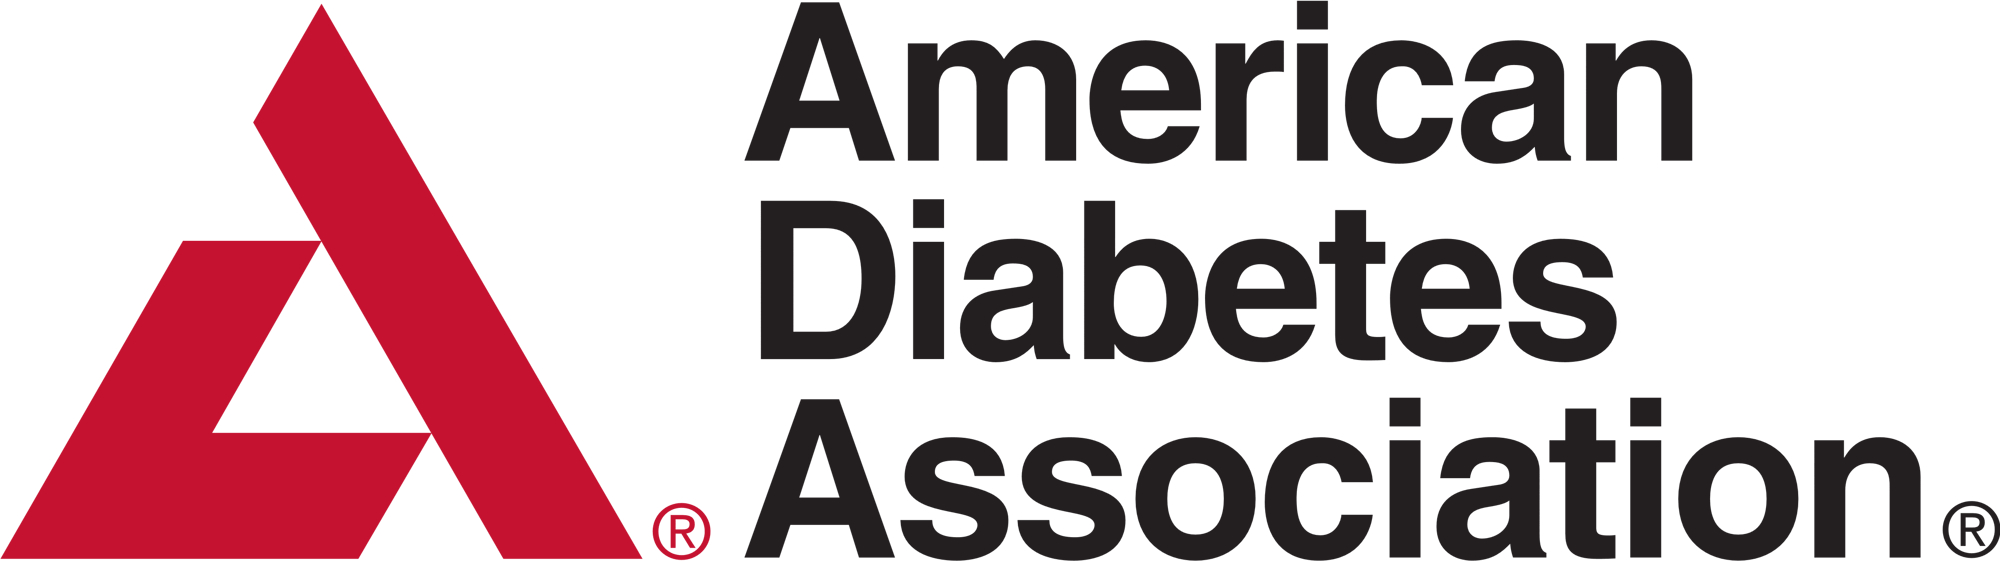 American Diabetes Association logo png